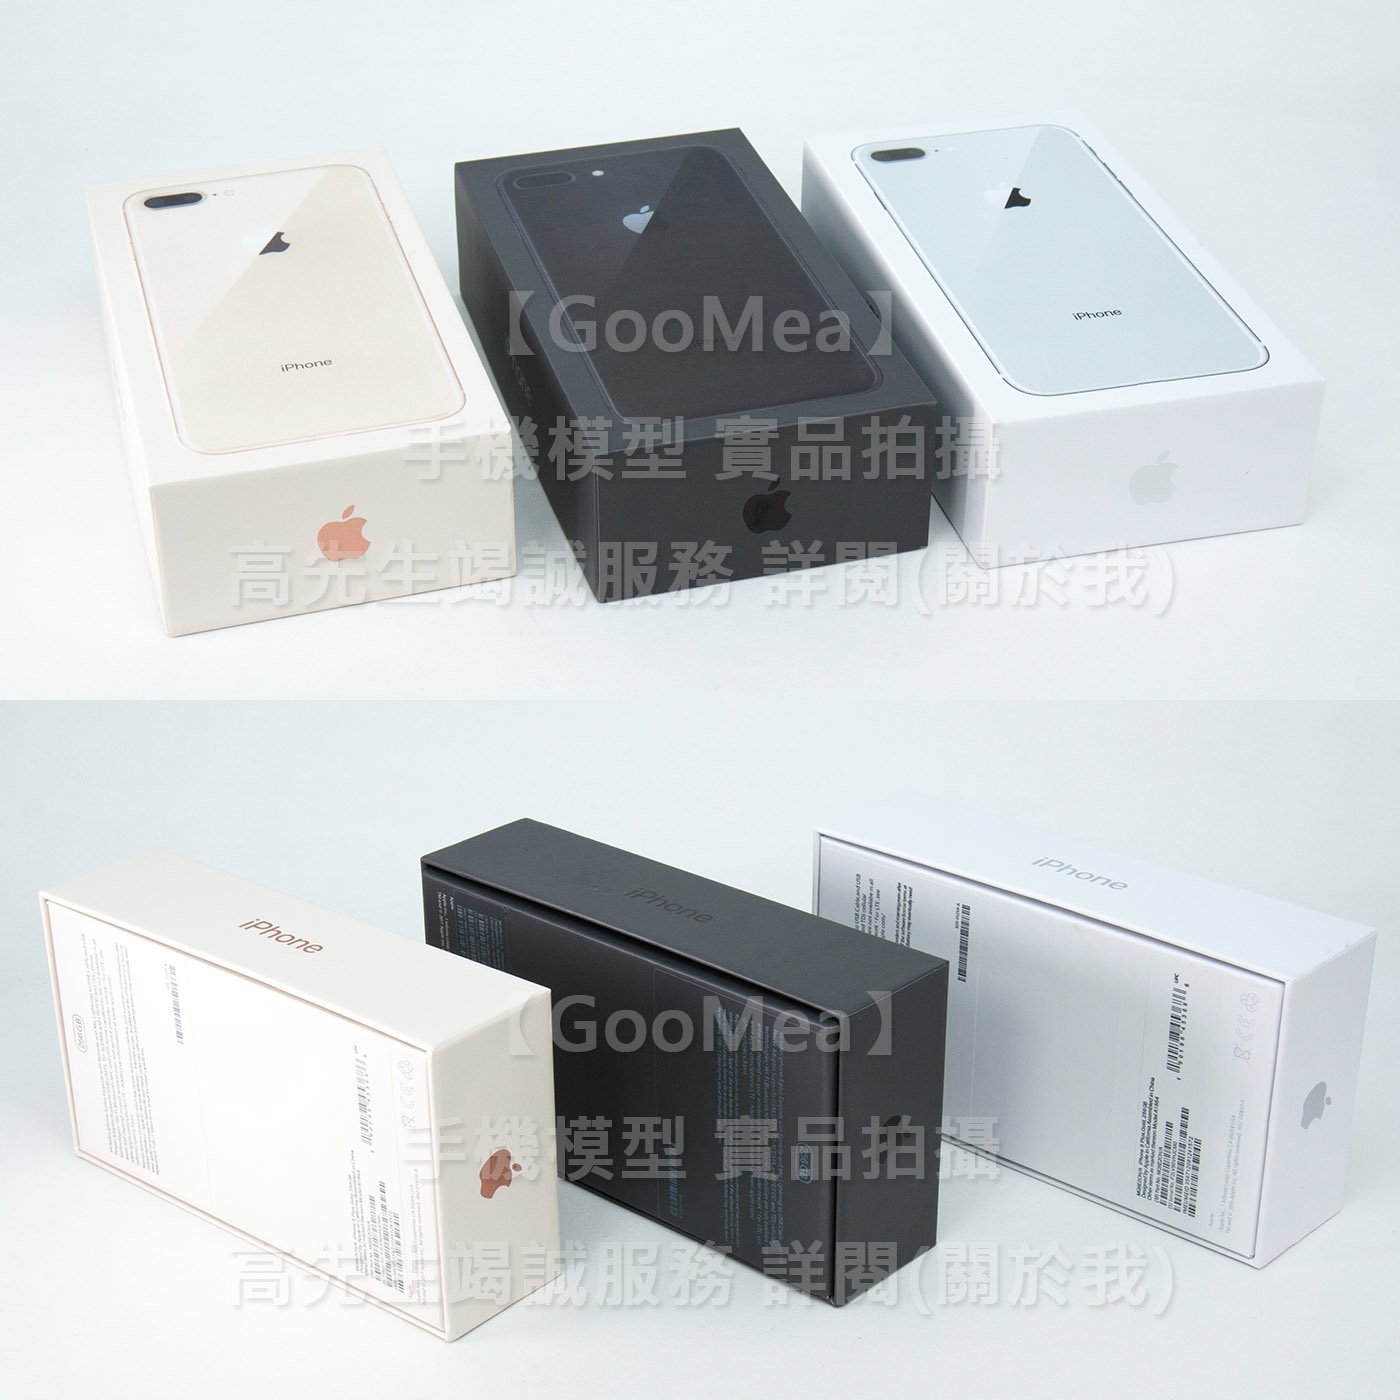 GooMea】外包裝紙盒原廠Apple 蘋果iPhone 8 Plus外盒展示盒空盒外箱隔間退卡針說明書仿製空箱| Yahoo奇摩拍賣